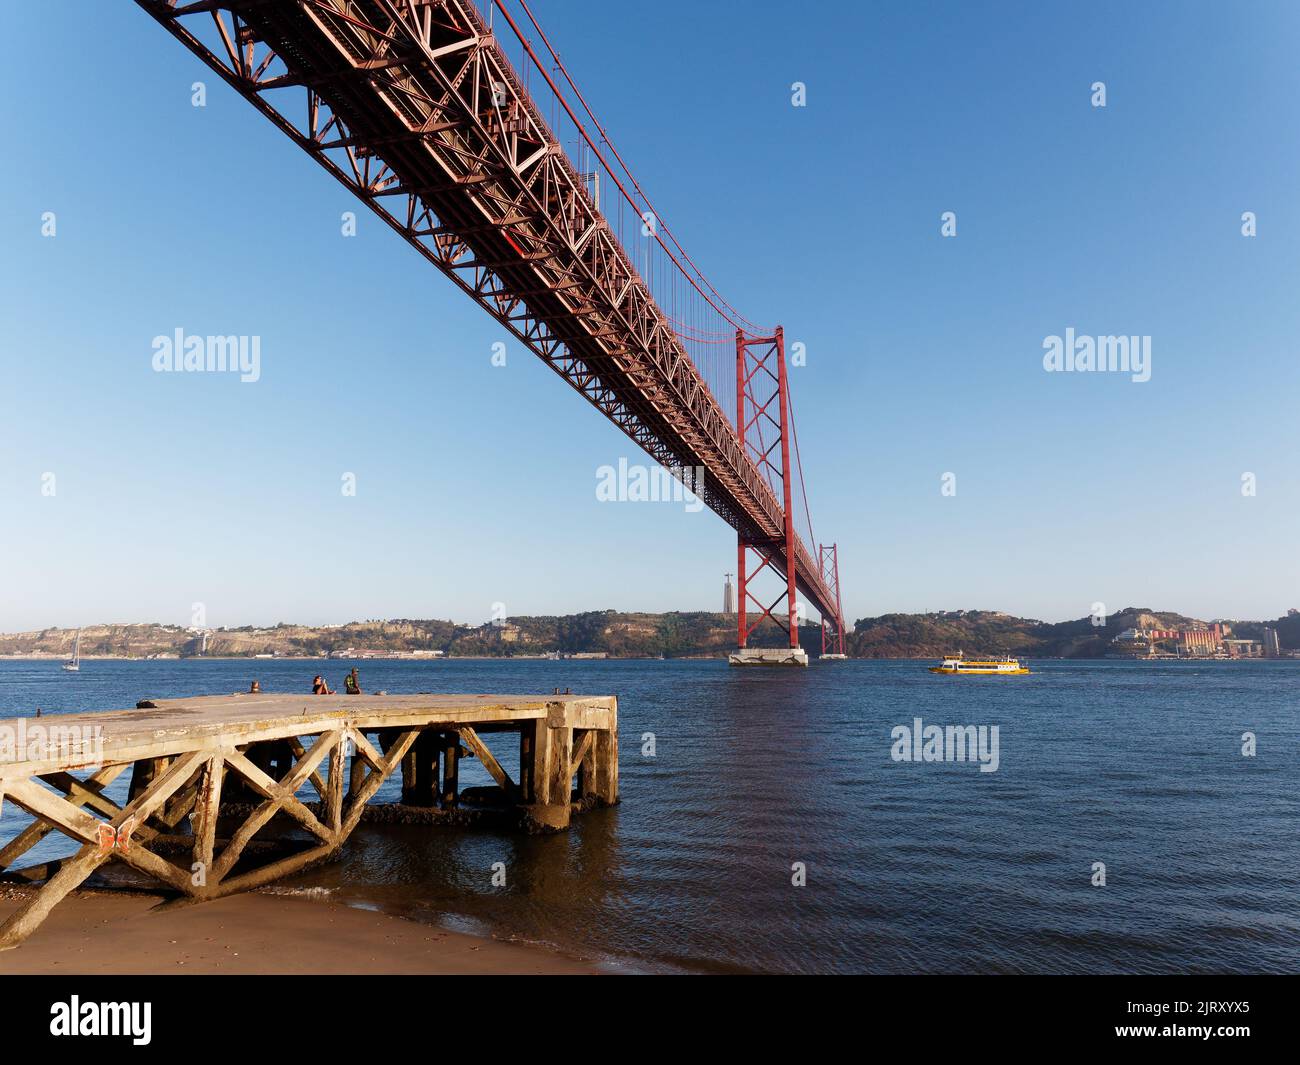 Ponte 25 de Abril (Brücke vom 25. April) über den Fluss Tejo in Lissabon, Portugal. Anlegestelle und Strand links. Stockfoto